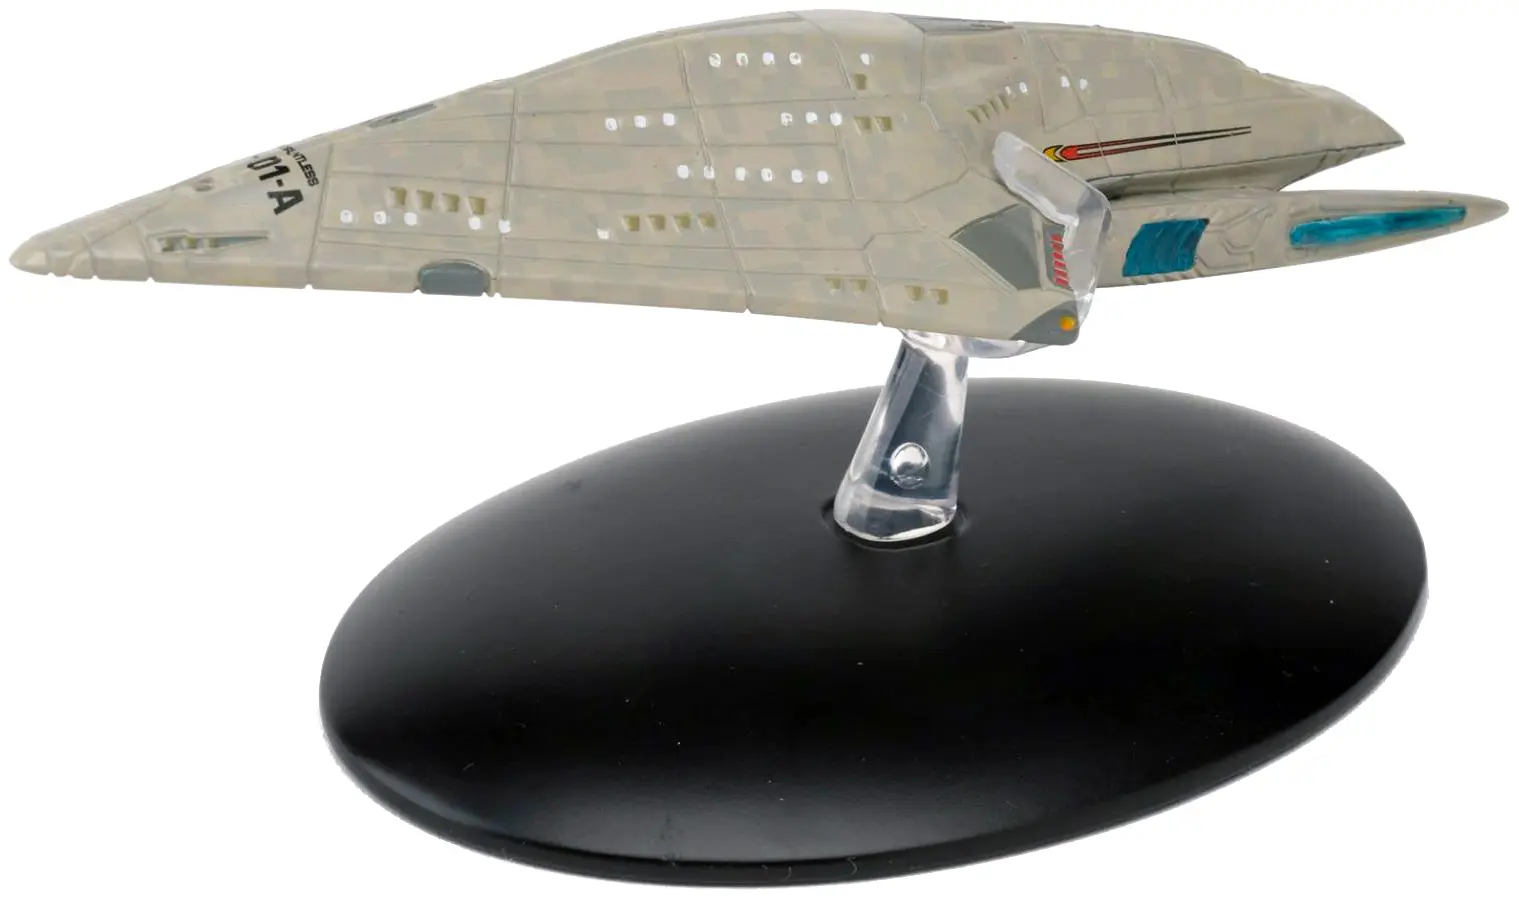 A model of a Star Trek Defiant-class starship.